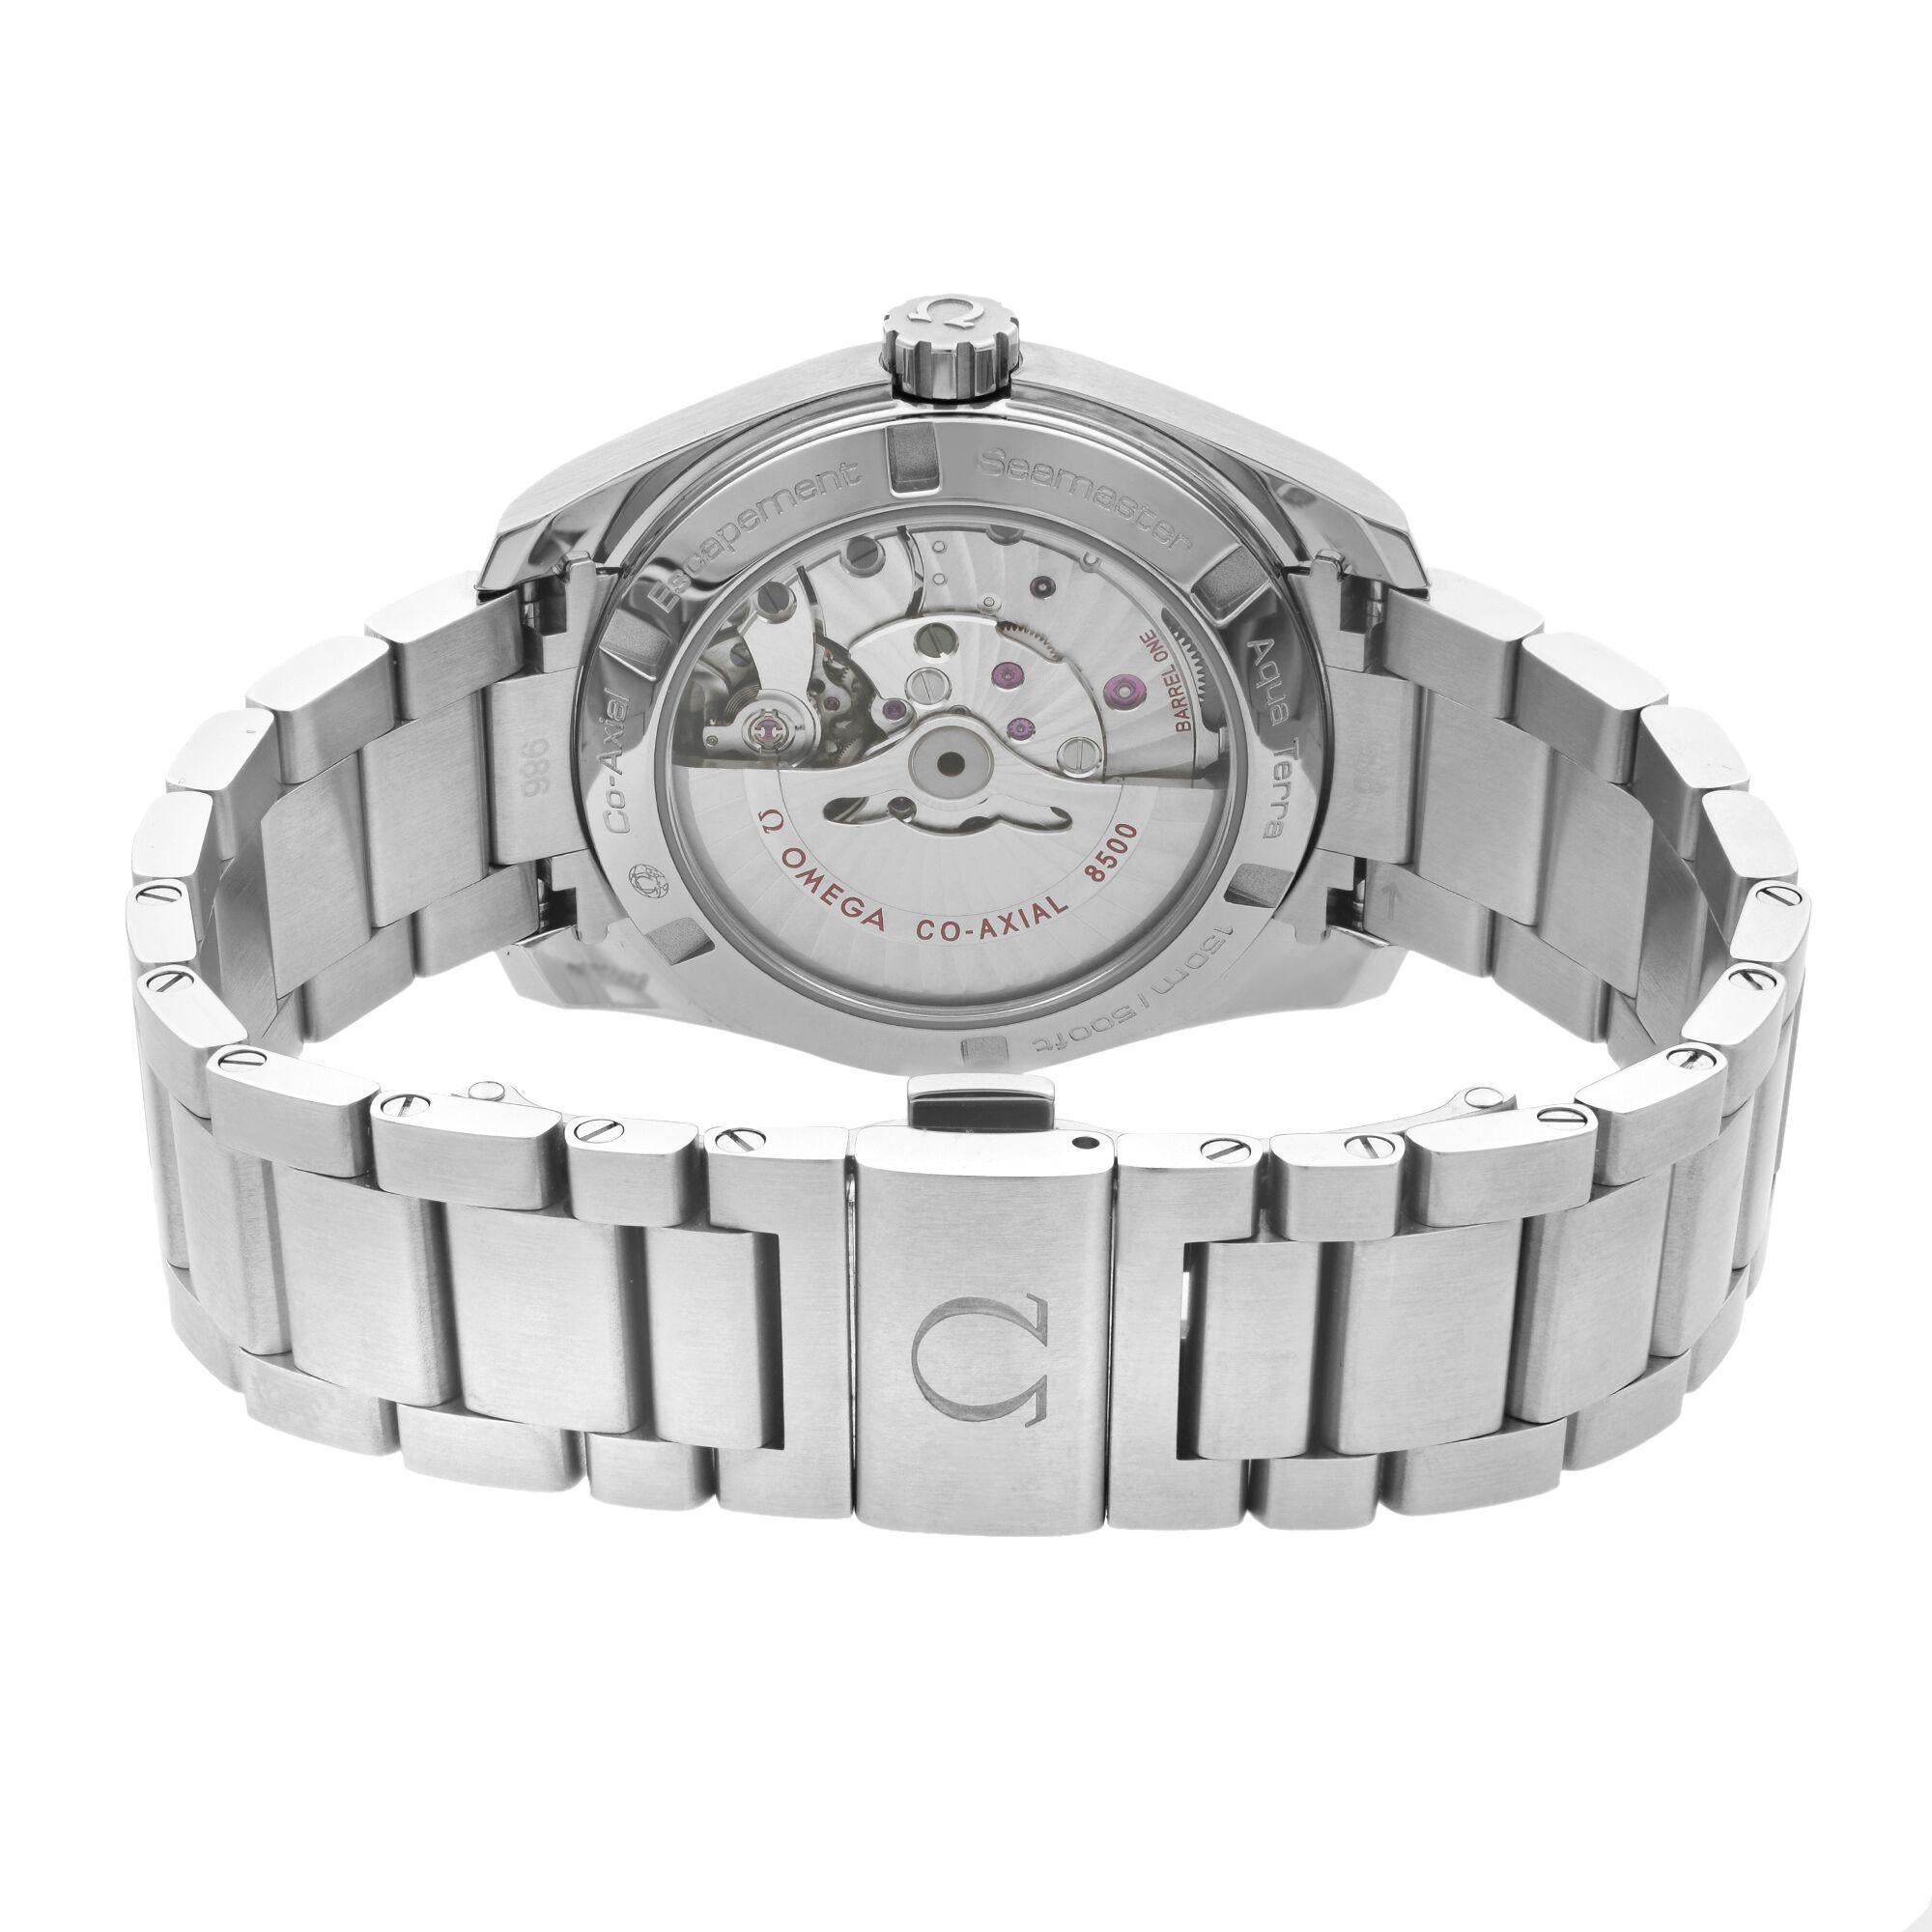 Omega Seamaster Aqua Terra Steel Diamond Black Dial Watch 231.15.39.21.51.001 2